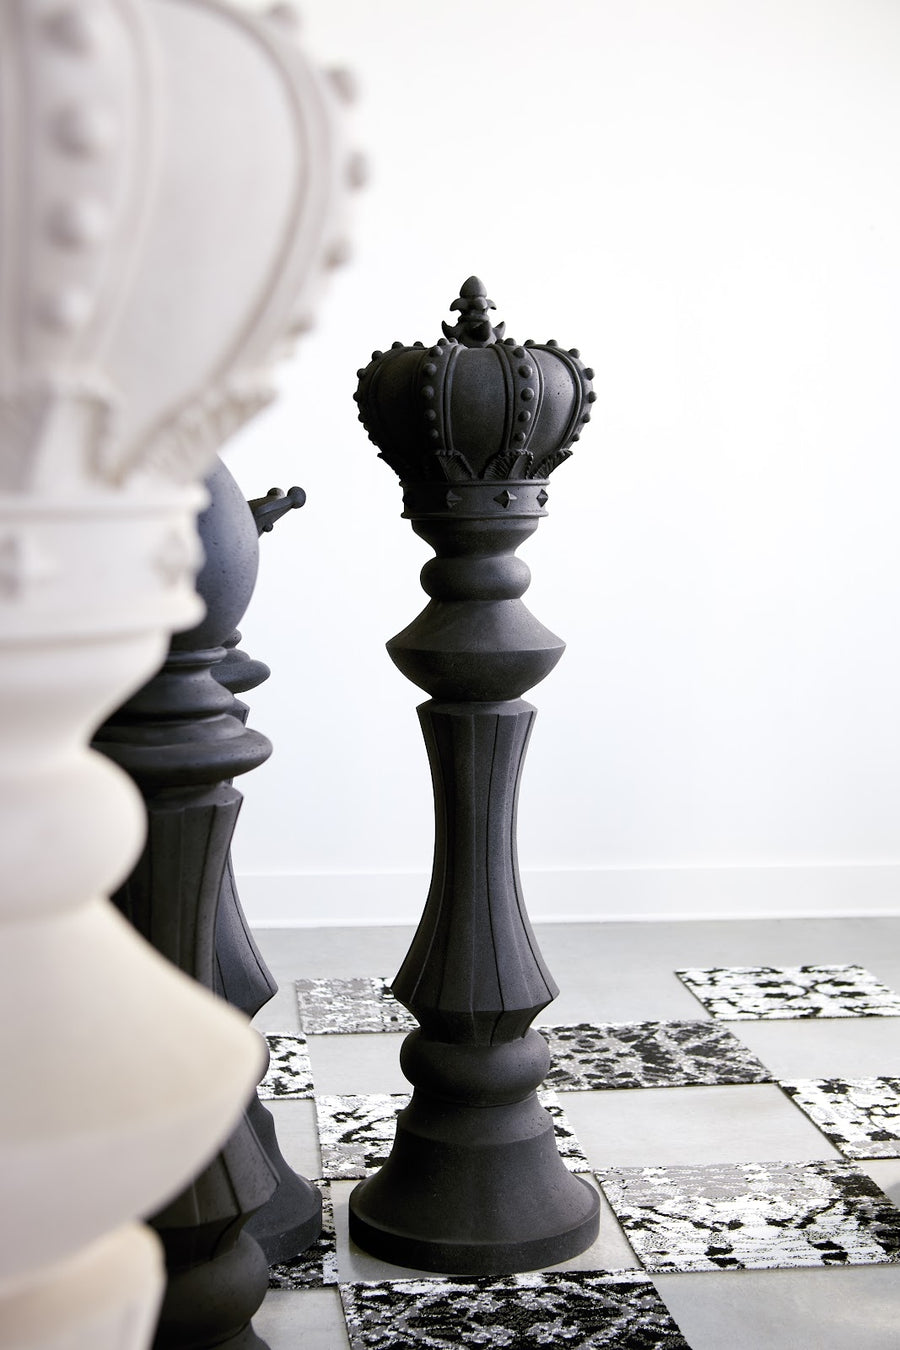 Pawn Chess Sculpture, Cast Stone Black